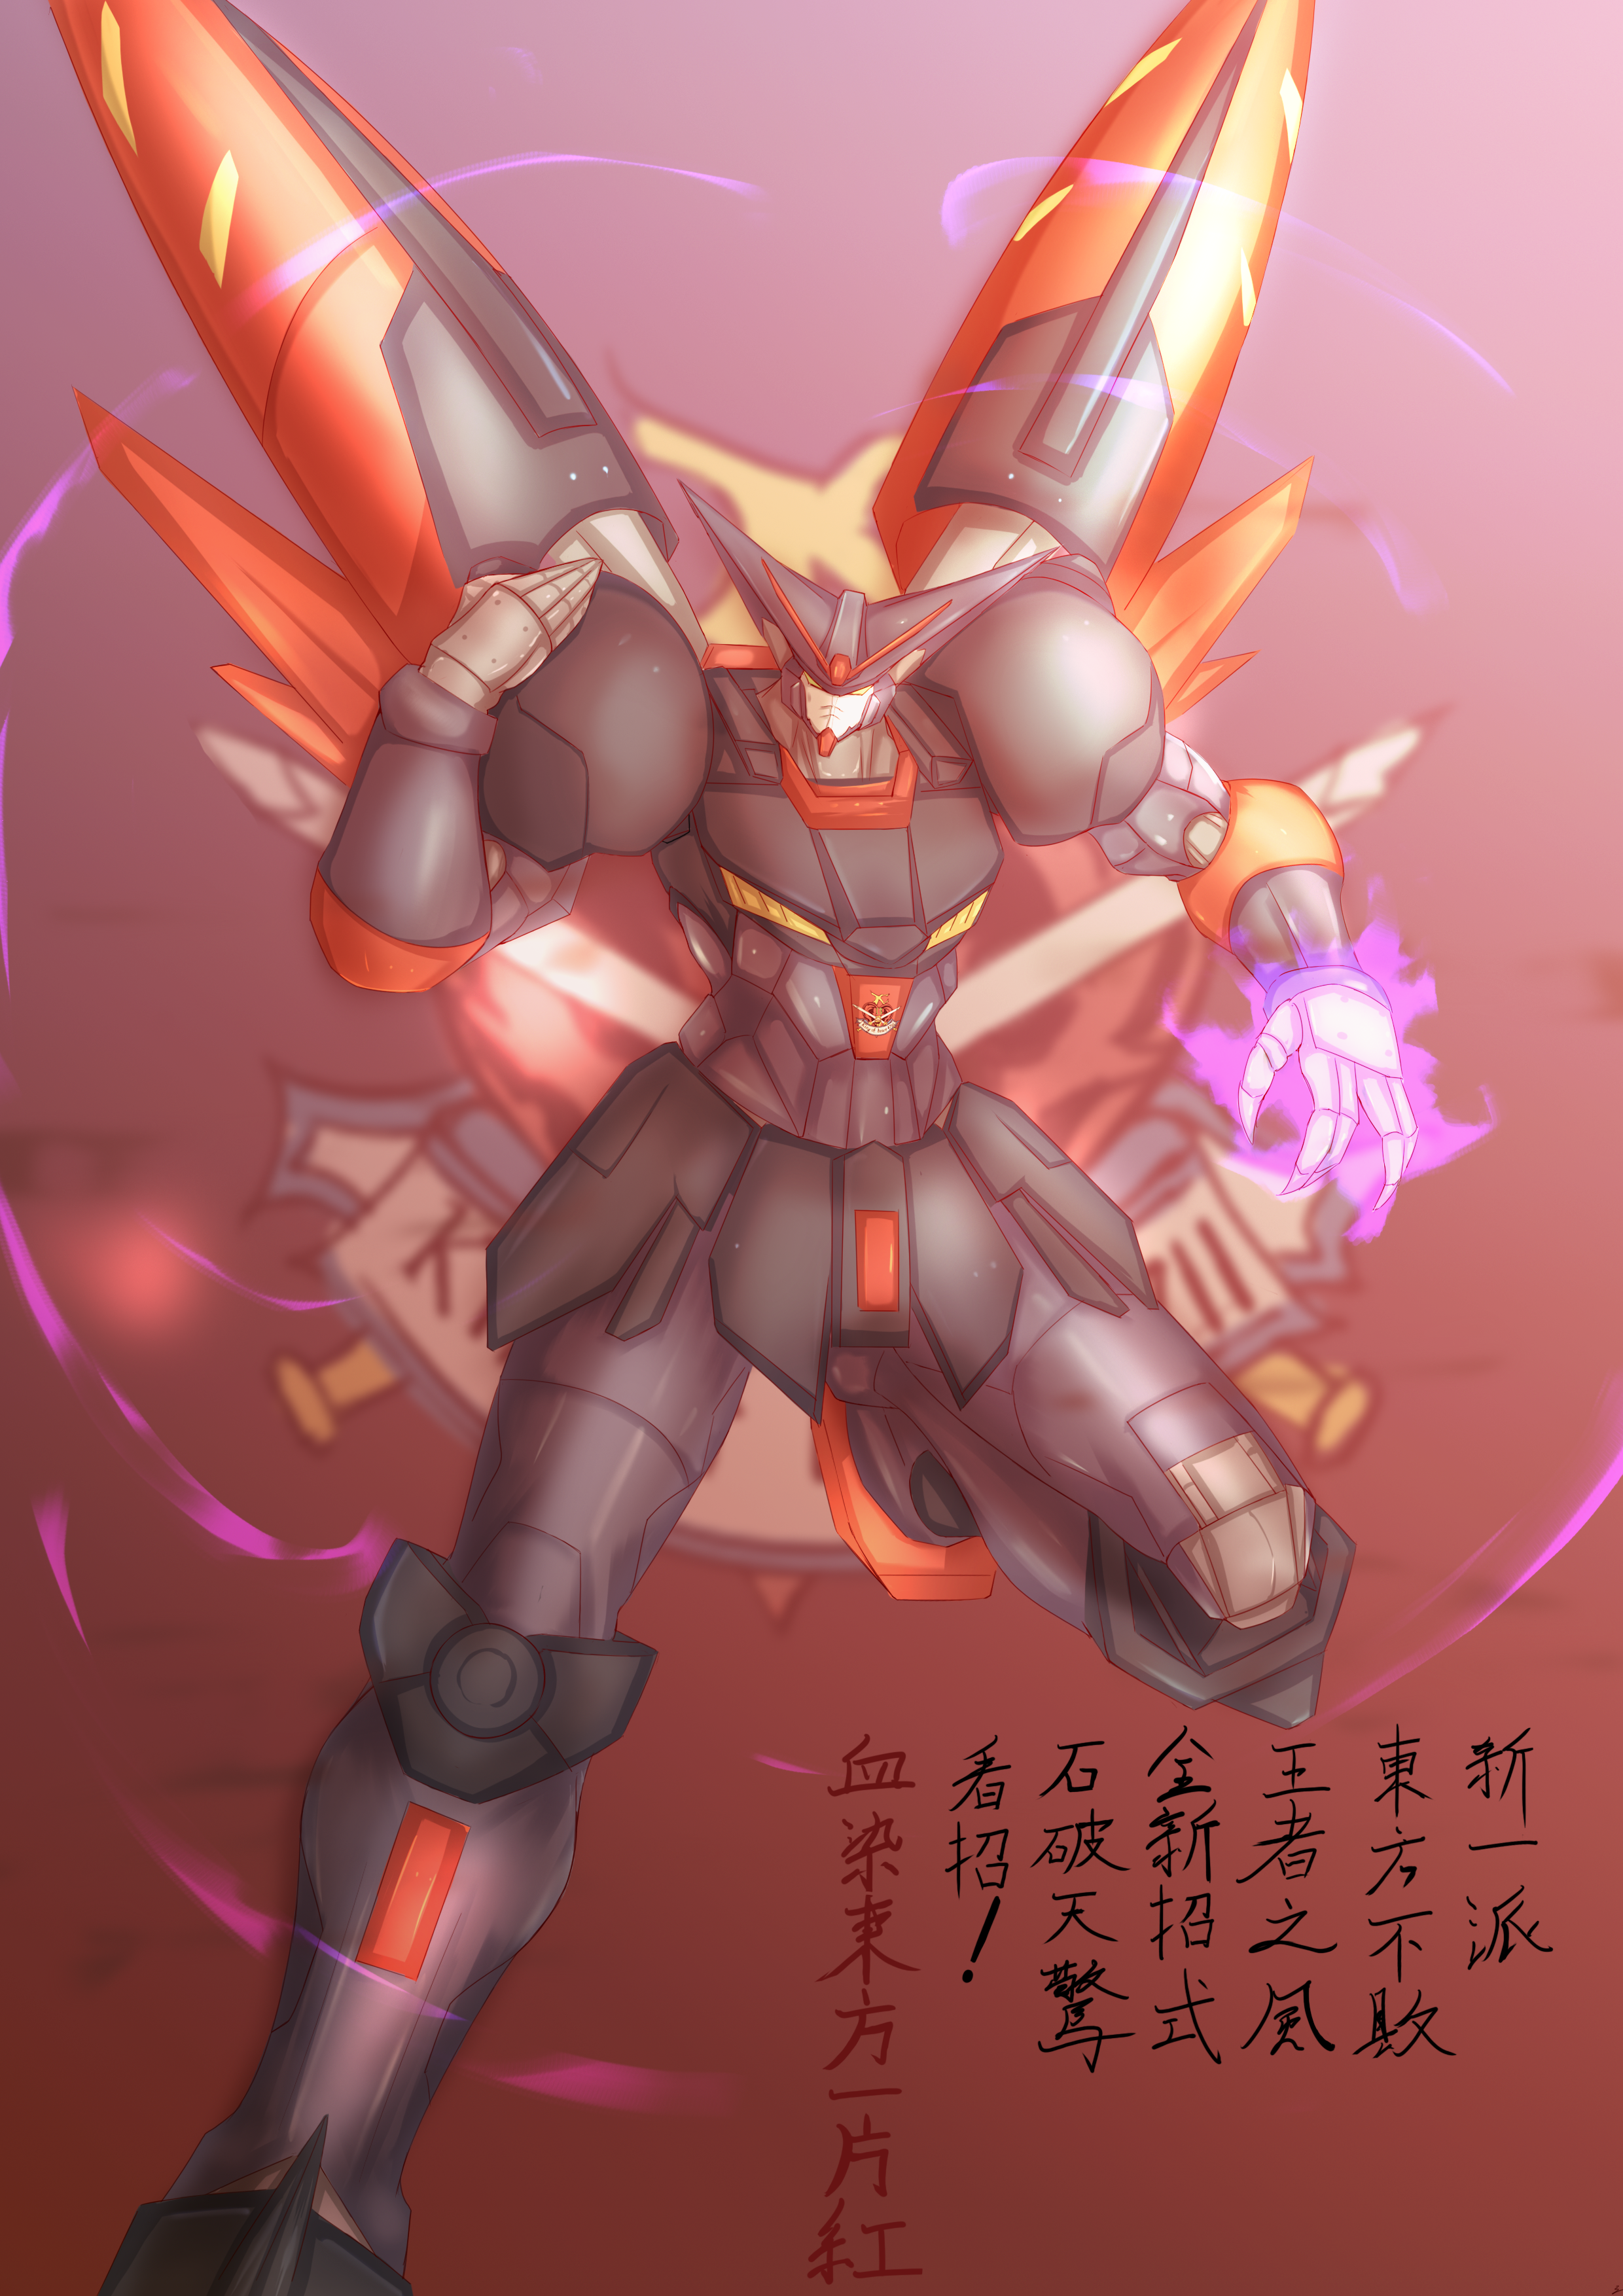 Anime 2480x3508 anime mechs Super Robot Taisen Mobile Fighter G Gundam Gundam Master Gundam artwork digital art fan art